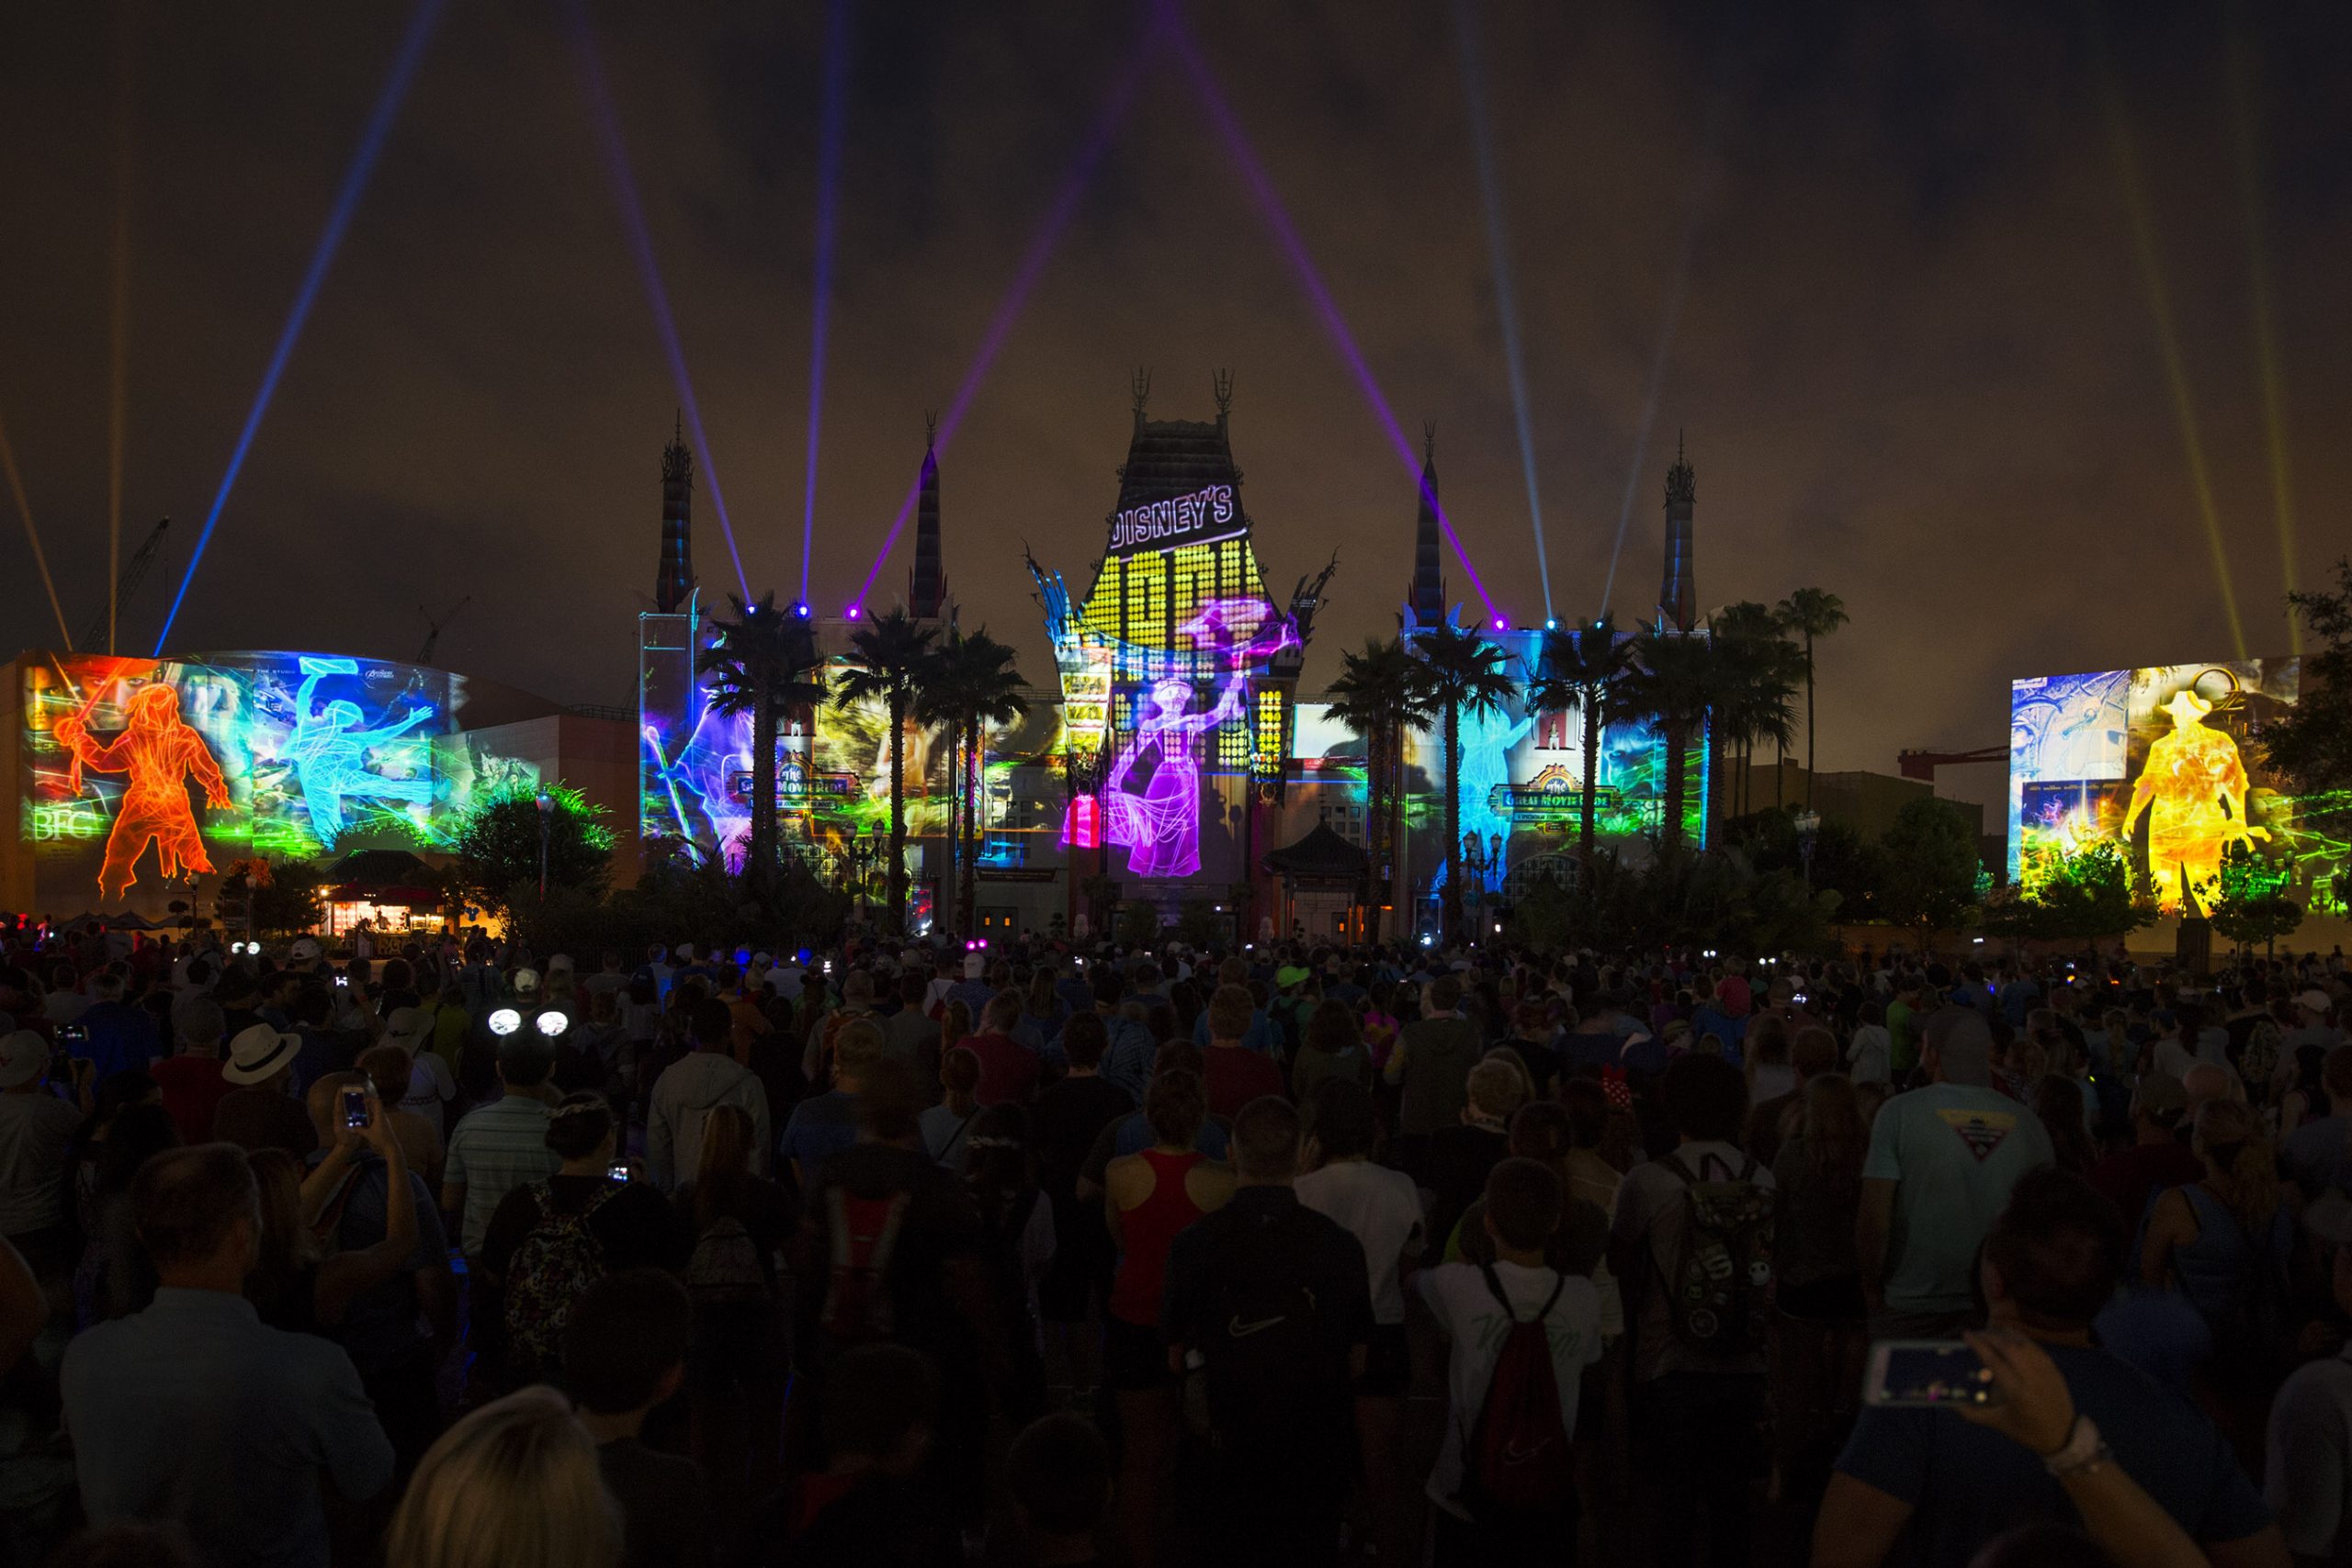 Disney Movie Magic” Projection Show Returning to Disney’s Hollywood Studios